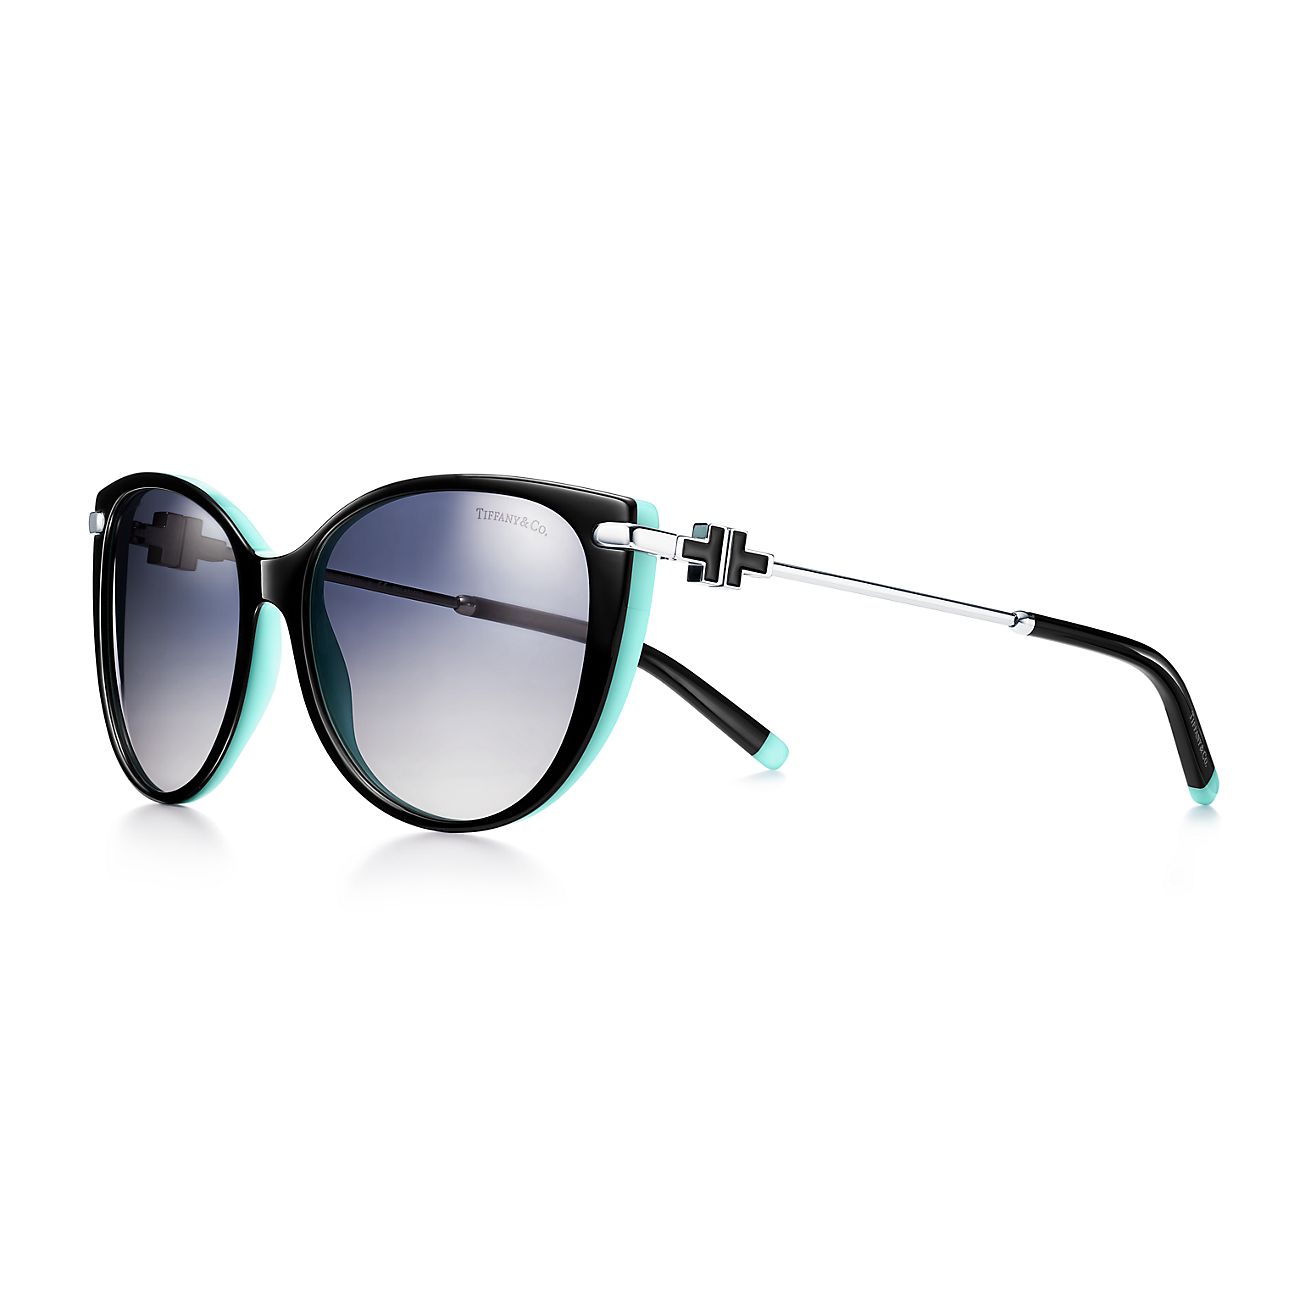 Tiffany T Cat Eye Sunglasses in Black Acetate with Tiffany Blue